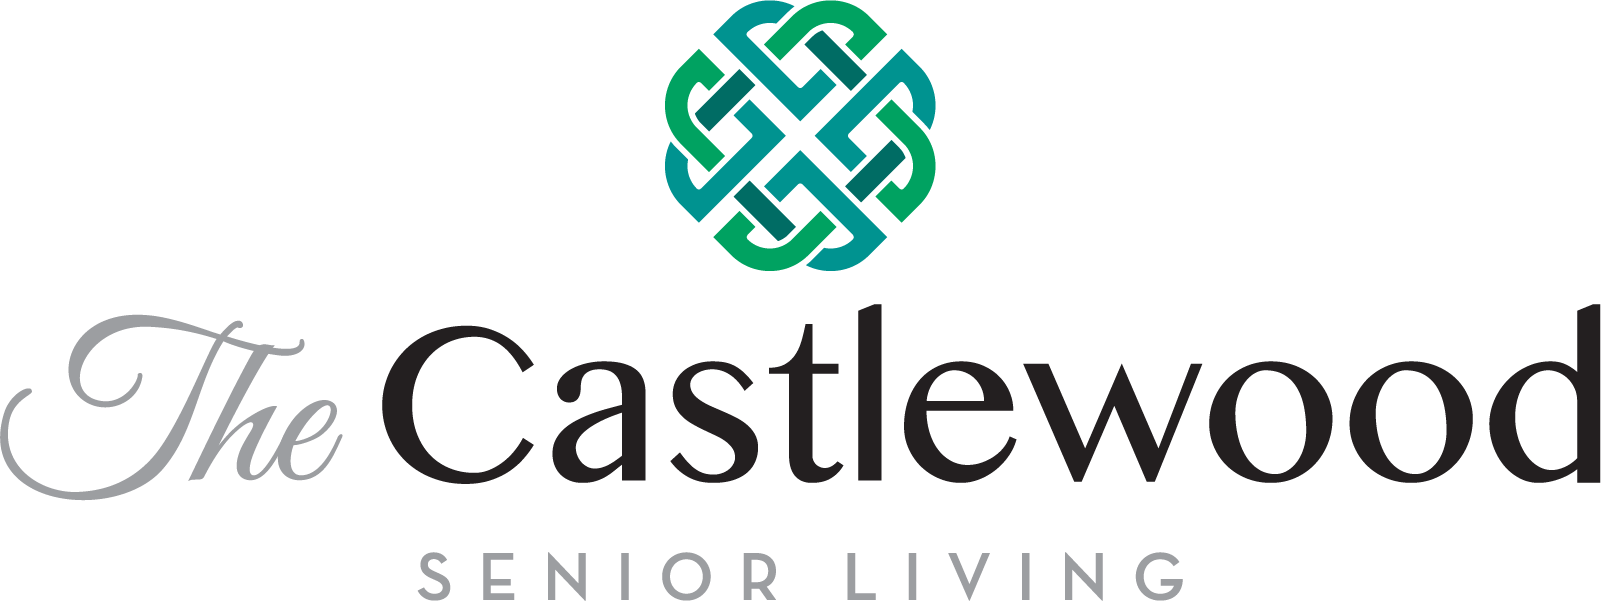 Castlewood Senior Living